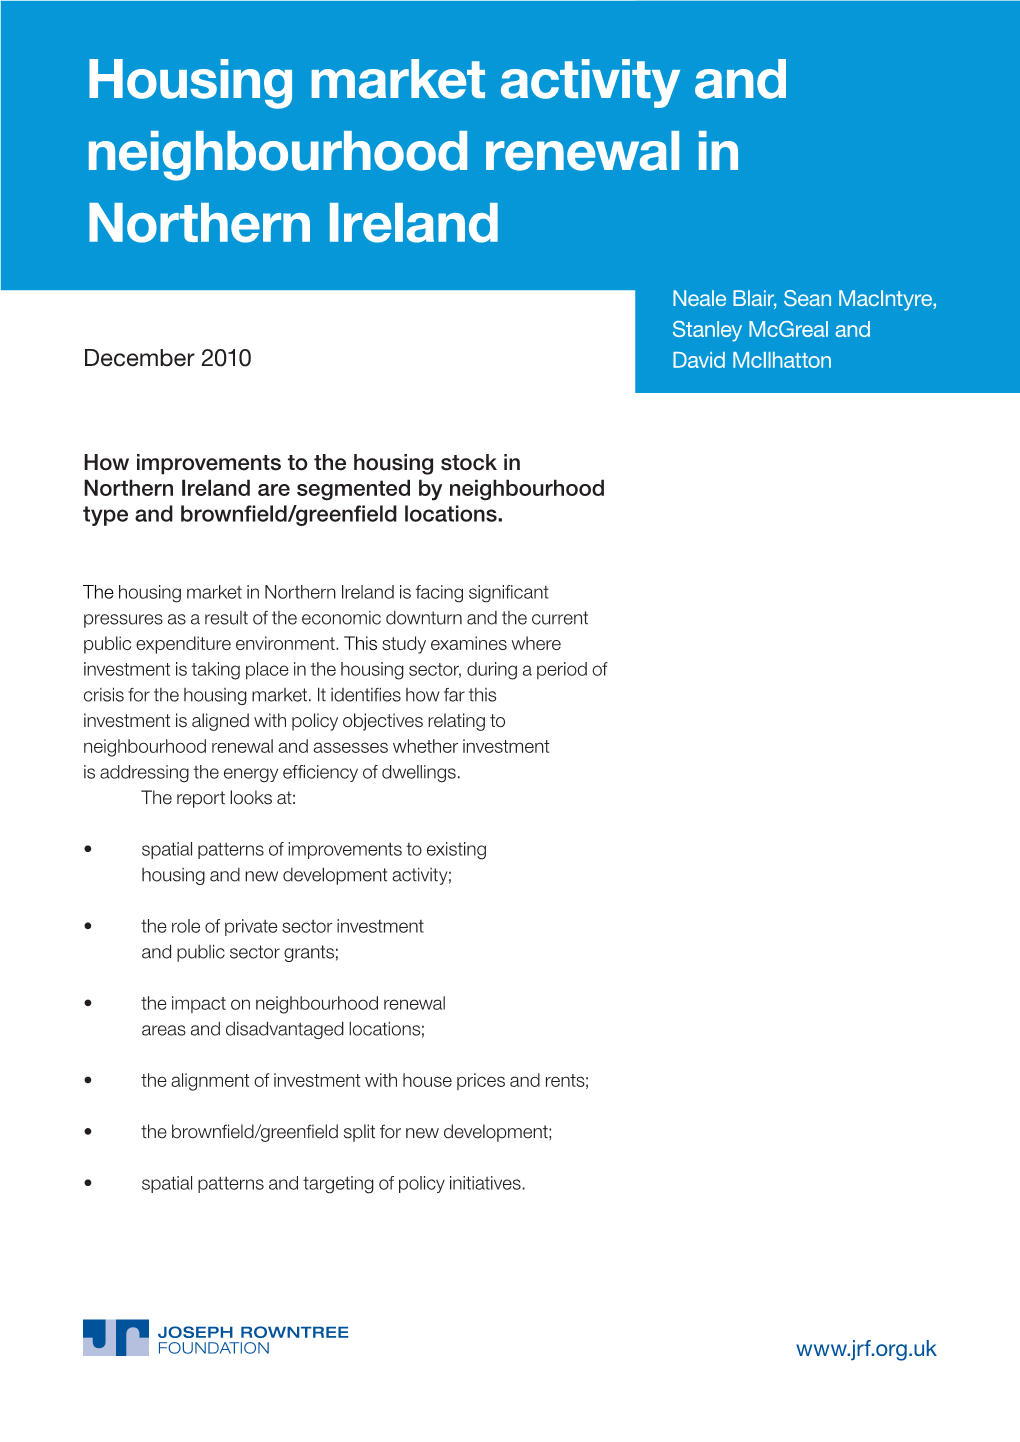 Housing Market Activity and Neighbourhood Renewal in Northern Ireland